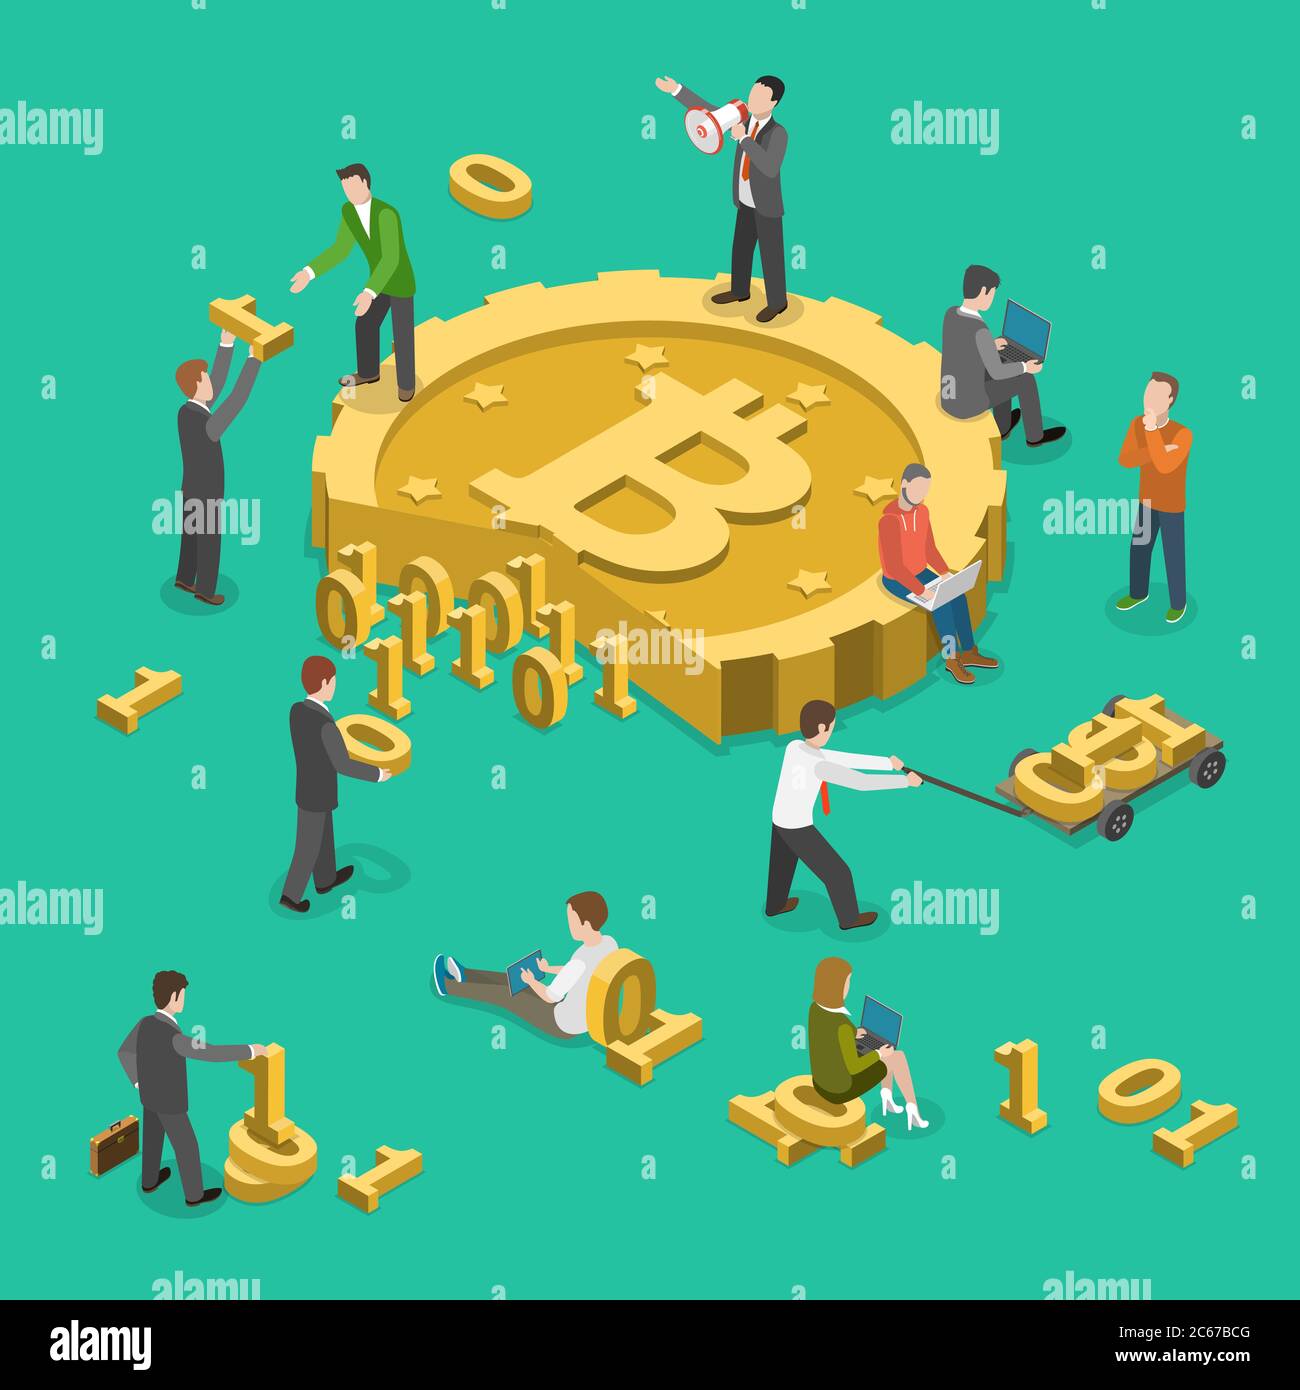 Bitcoin Seamless Pattern Louis Vuitton Supreme Style. Vector illustration  Stock Vector Image & Art - Alamy